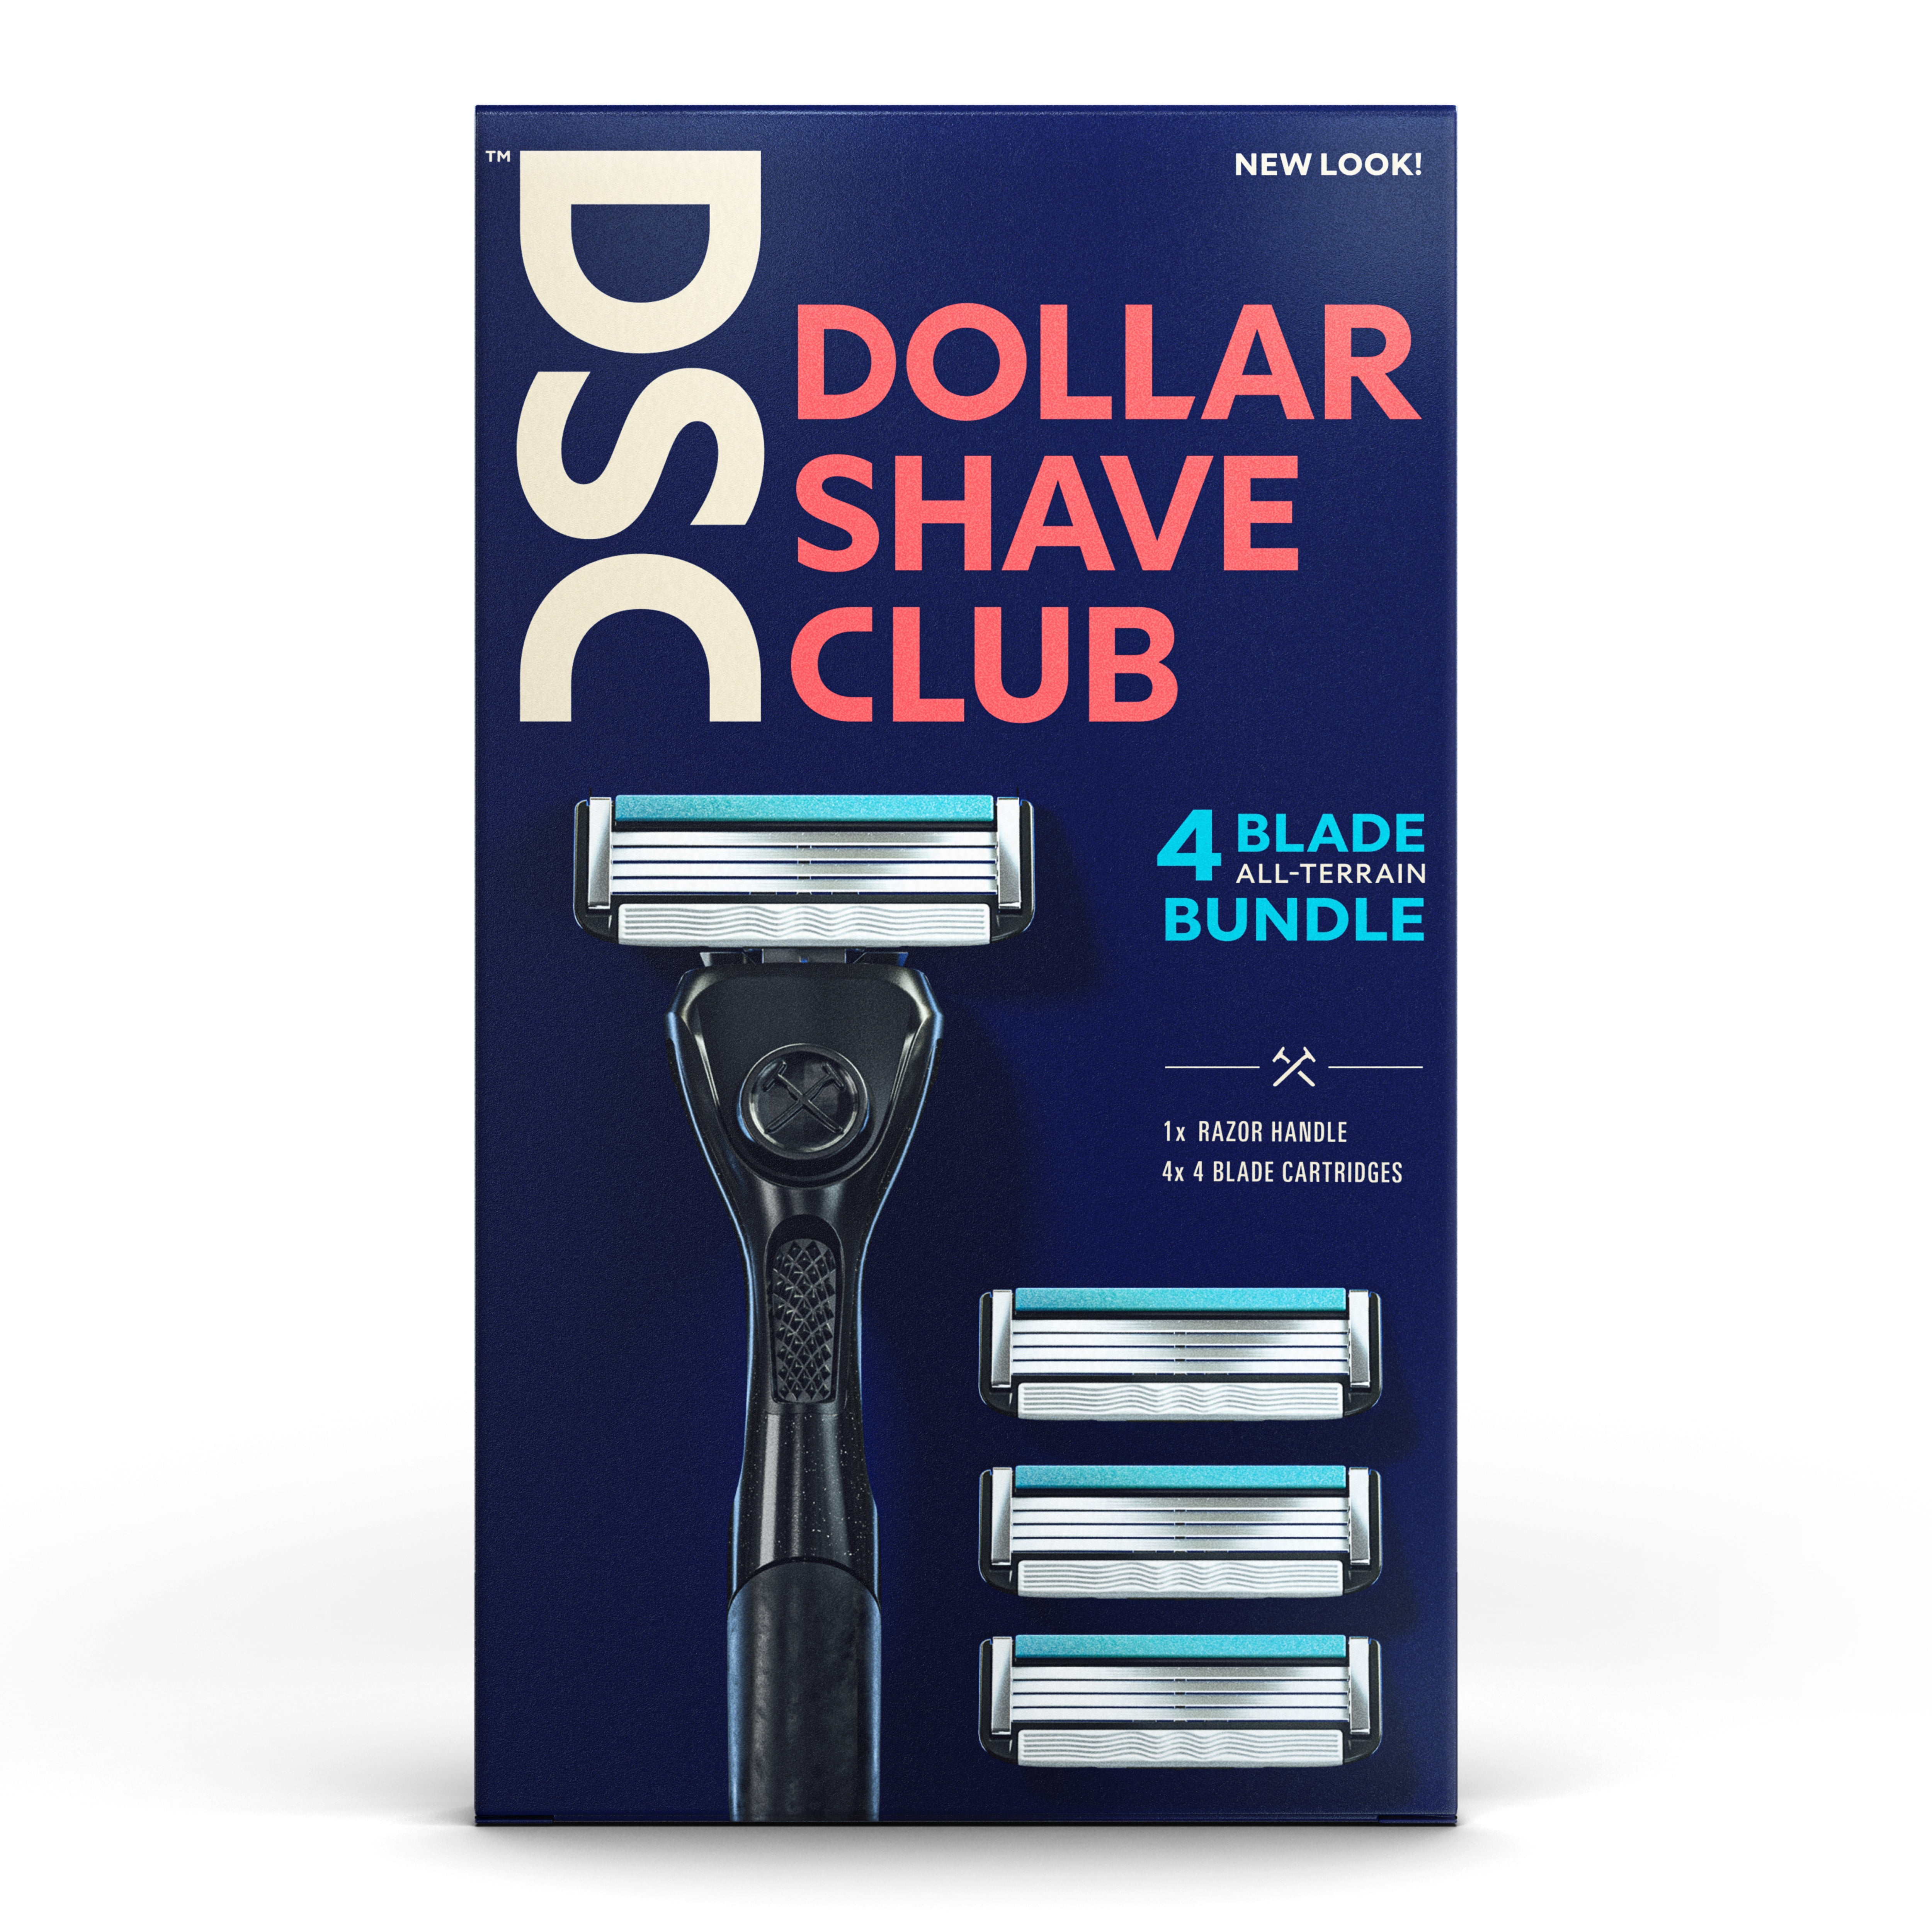 Dollar Shave Club 4Blade Razor Bundle for AllTerrain Shaving, 1